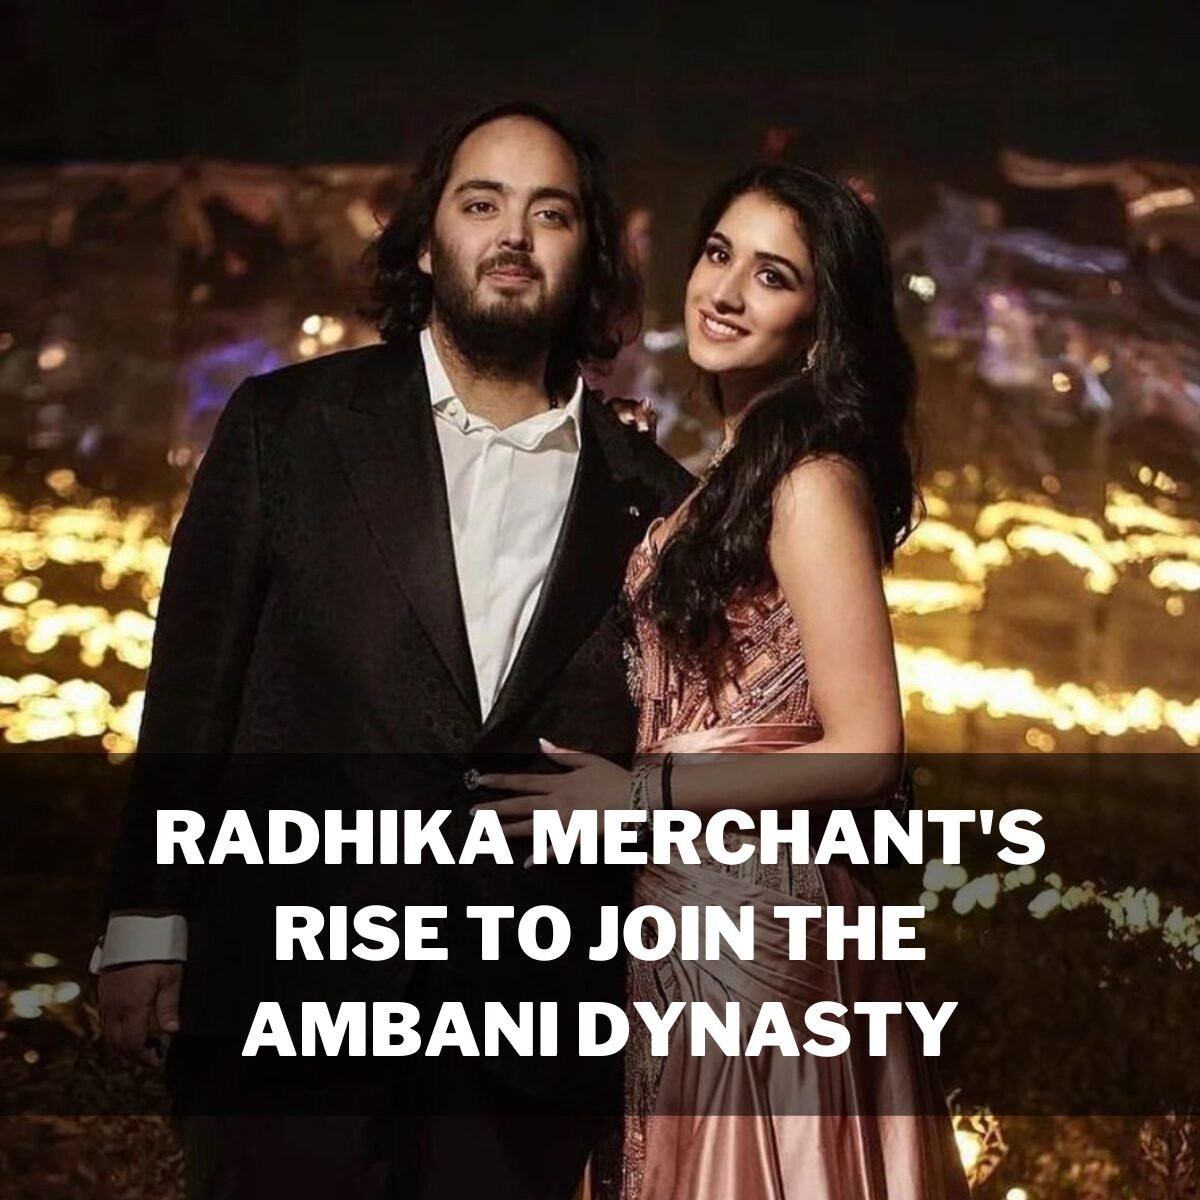 Radhika Merchant's Rise to Join the Ambani Dynasty